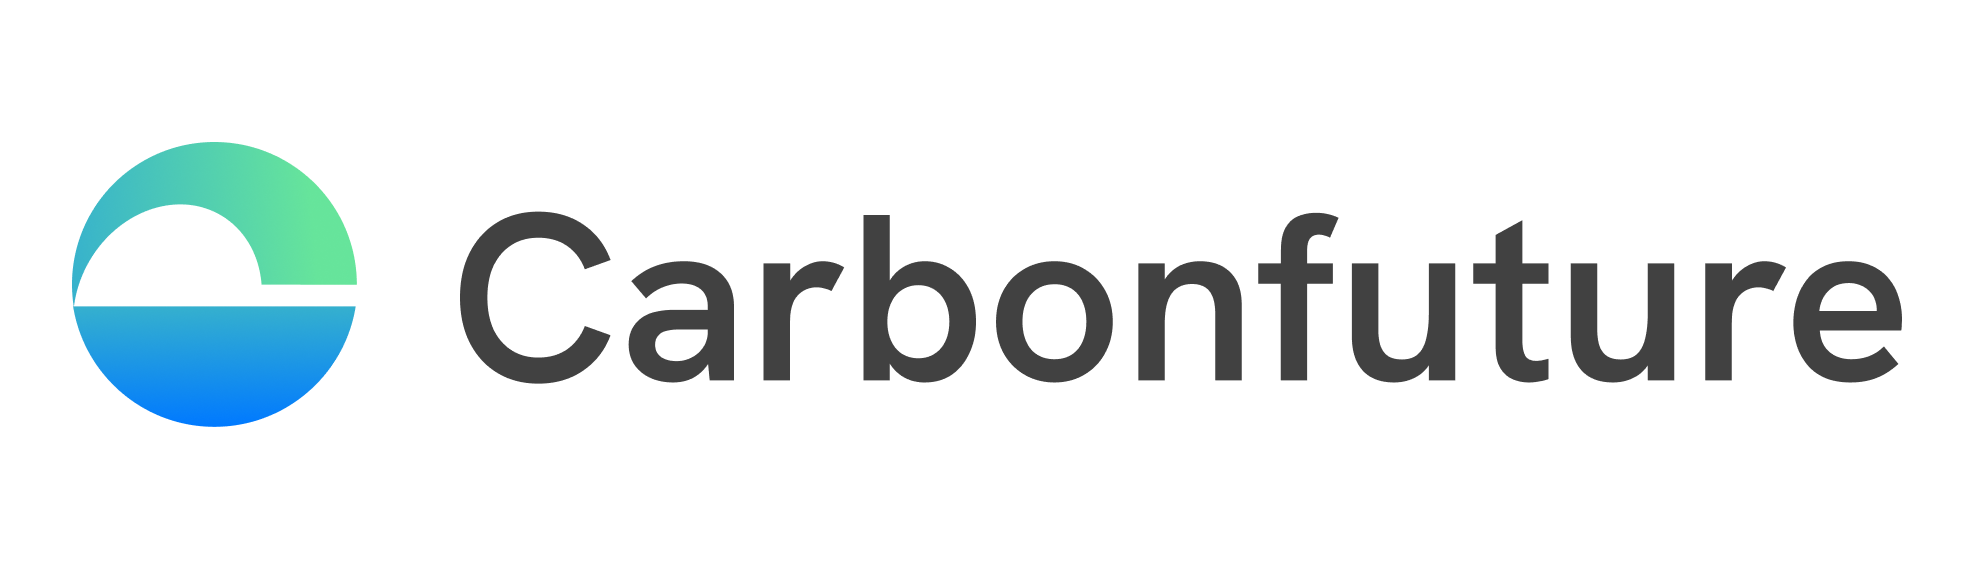 Carbonfuture new logo v2